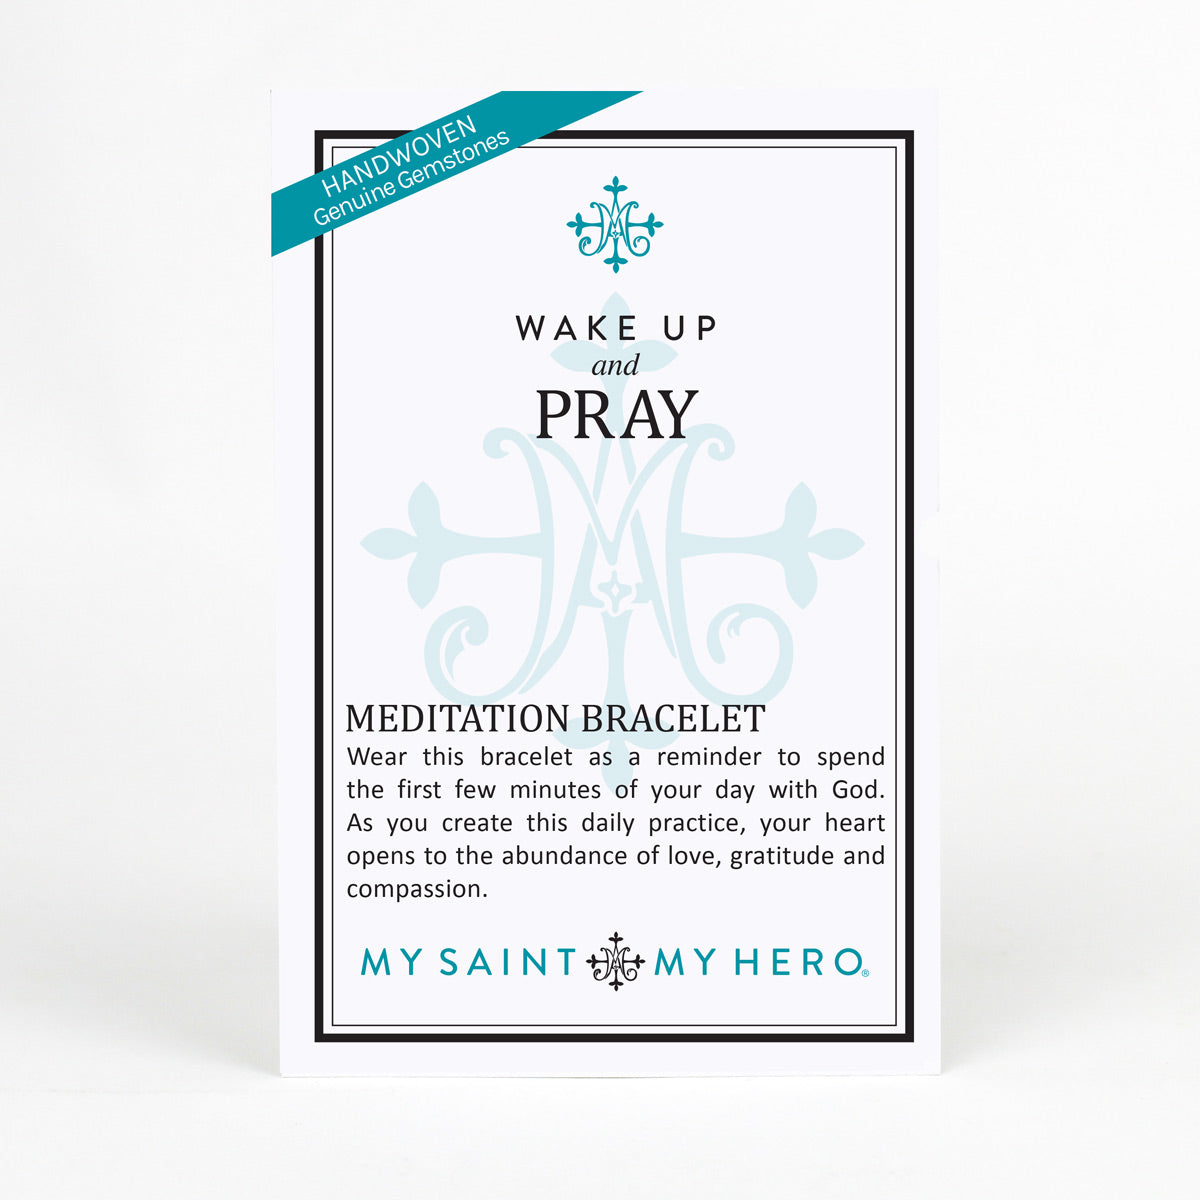 Wake Up and Pray Meditation Bracelet - Hematite - My Saint My Hero